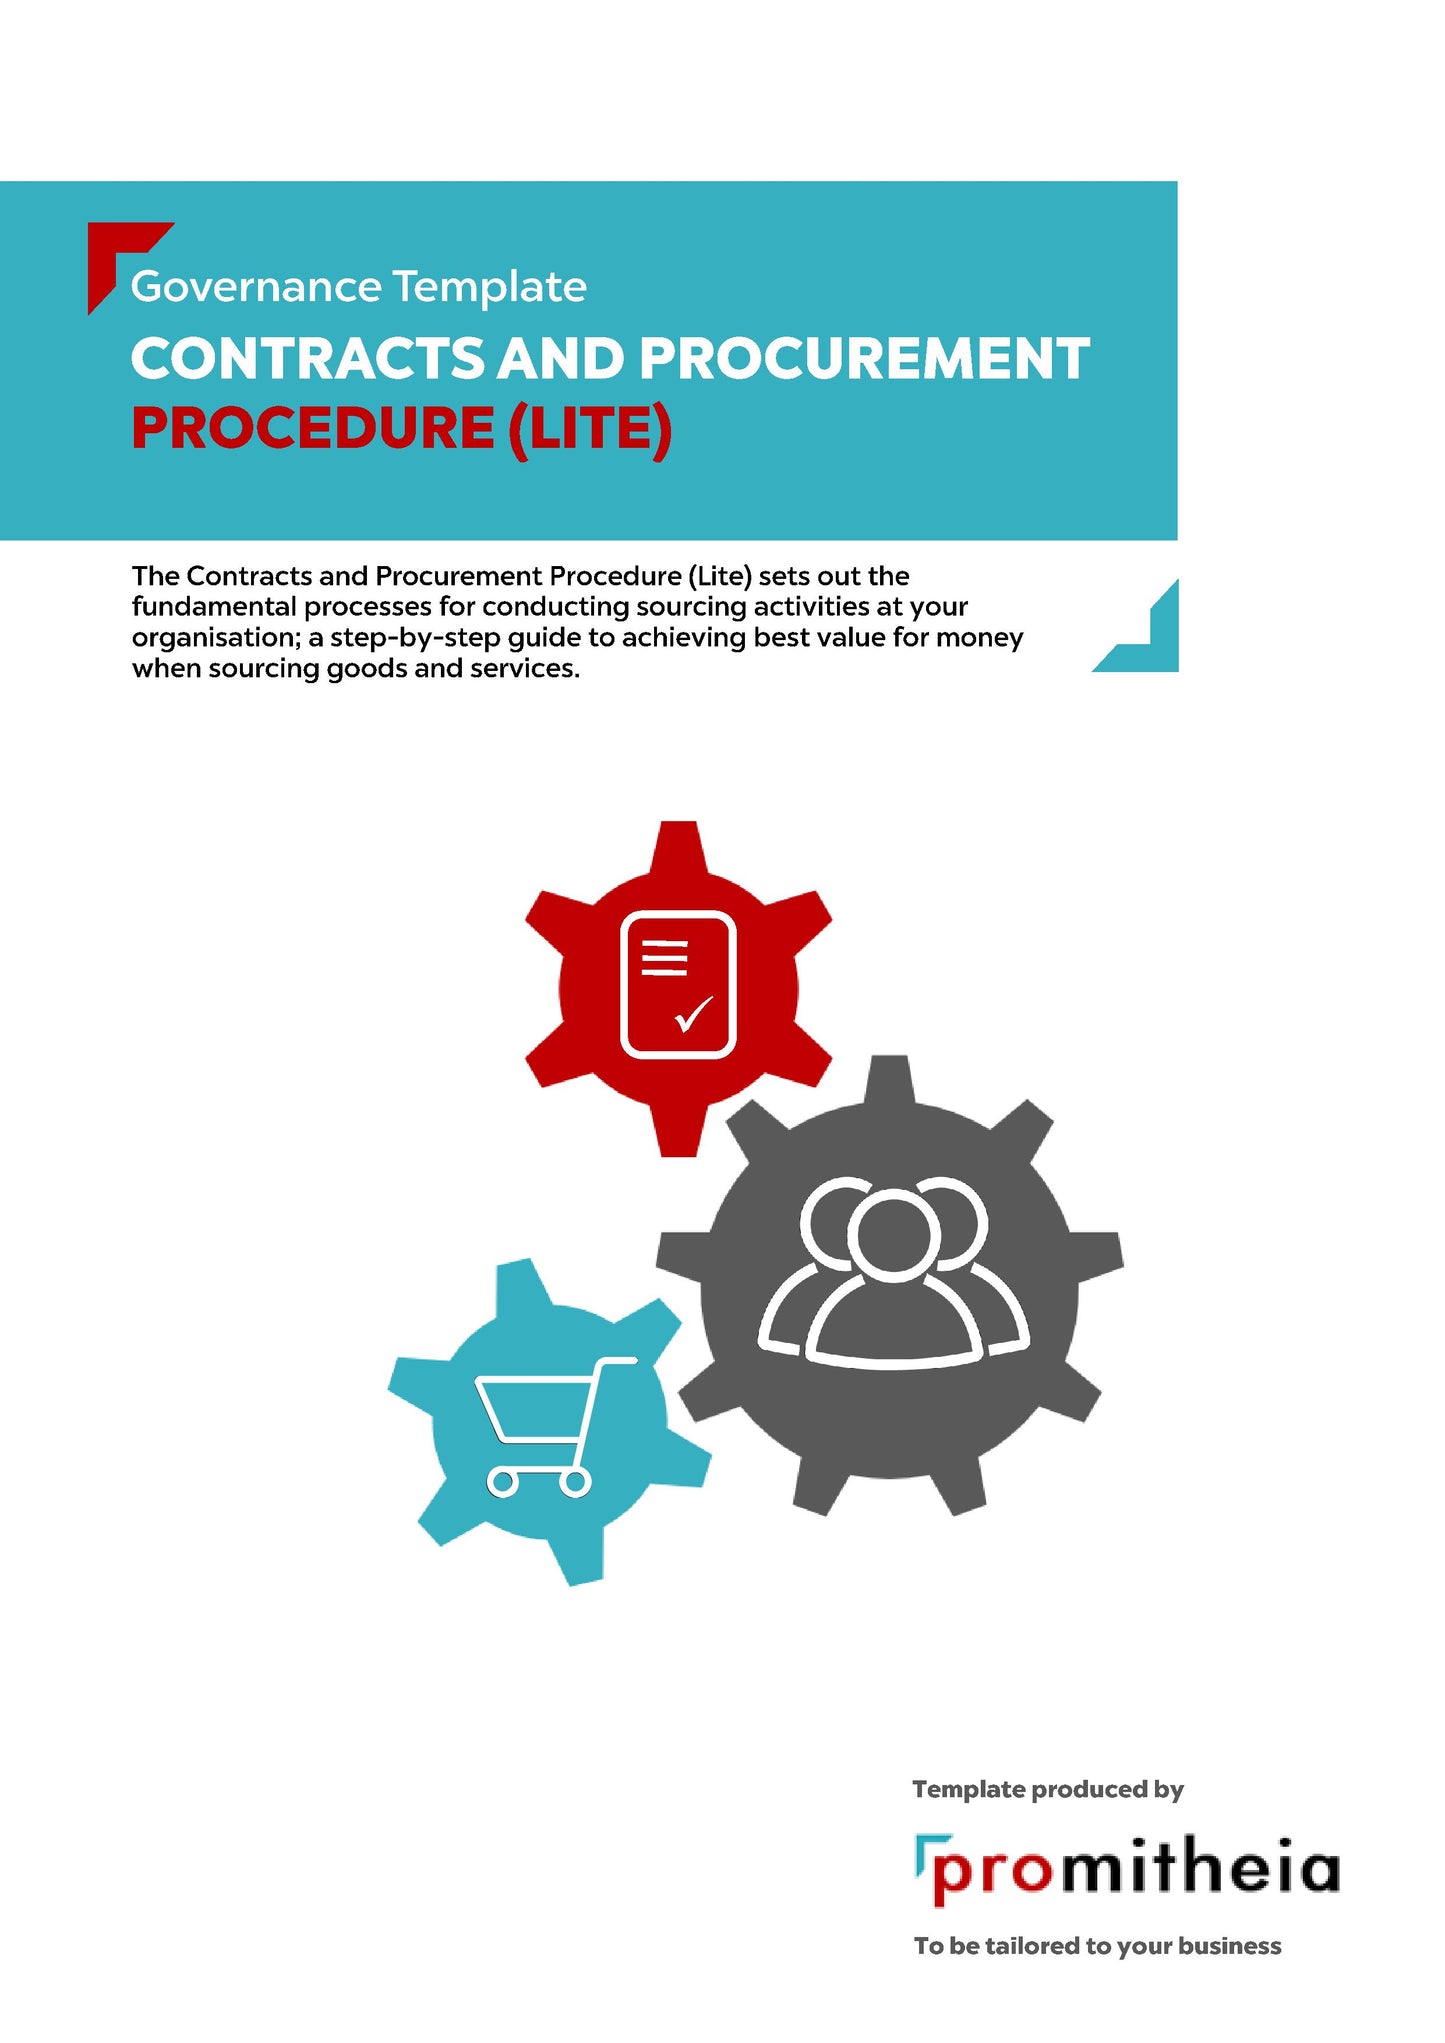 Contracts and Procurement Procedure Lite